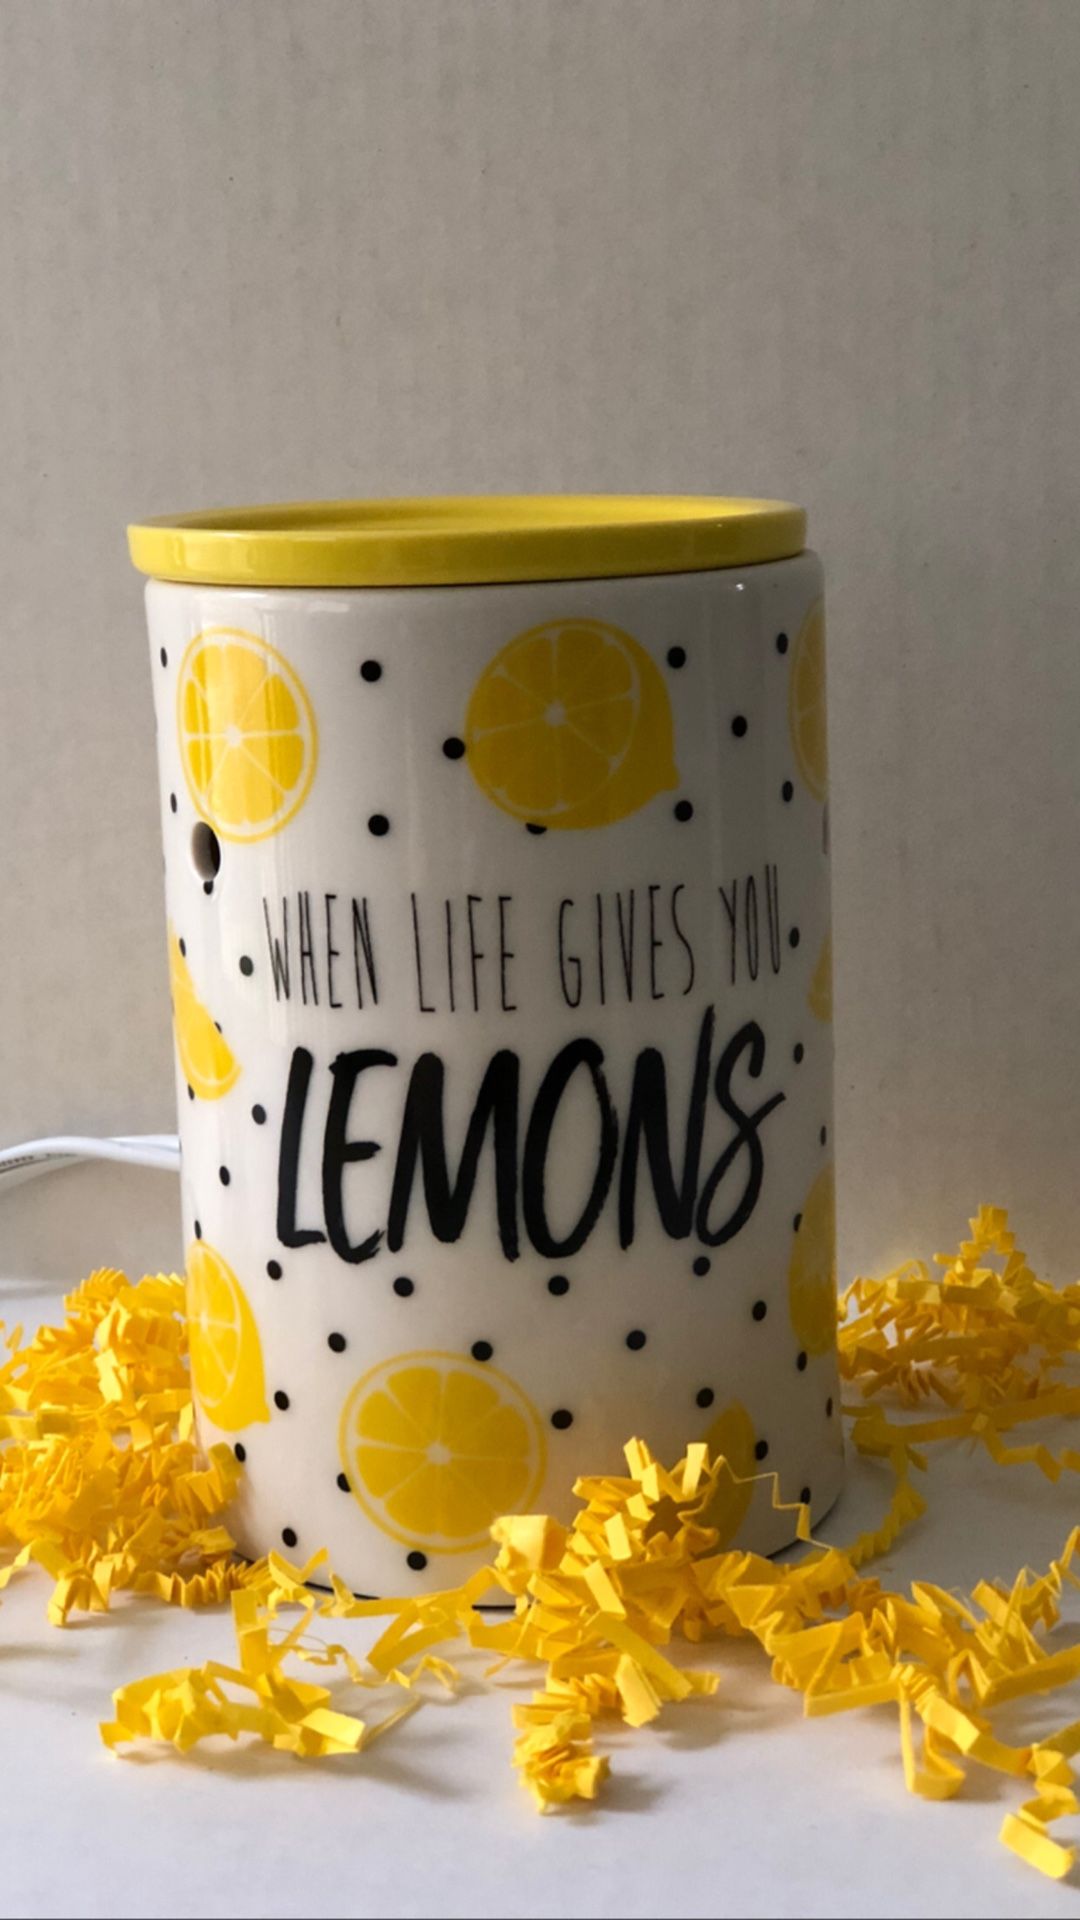 When Life gives you Lemons Basket